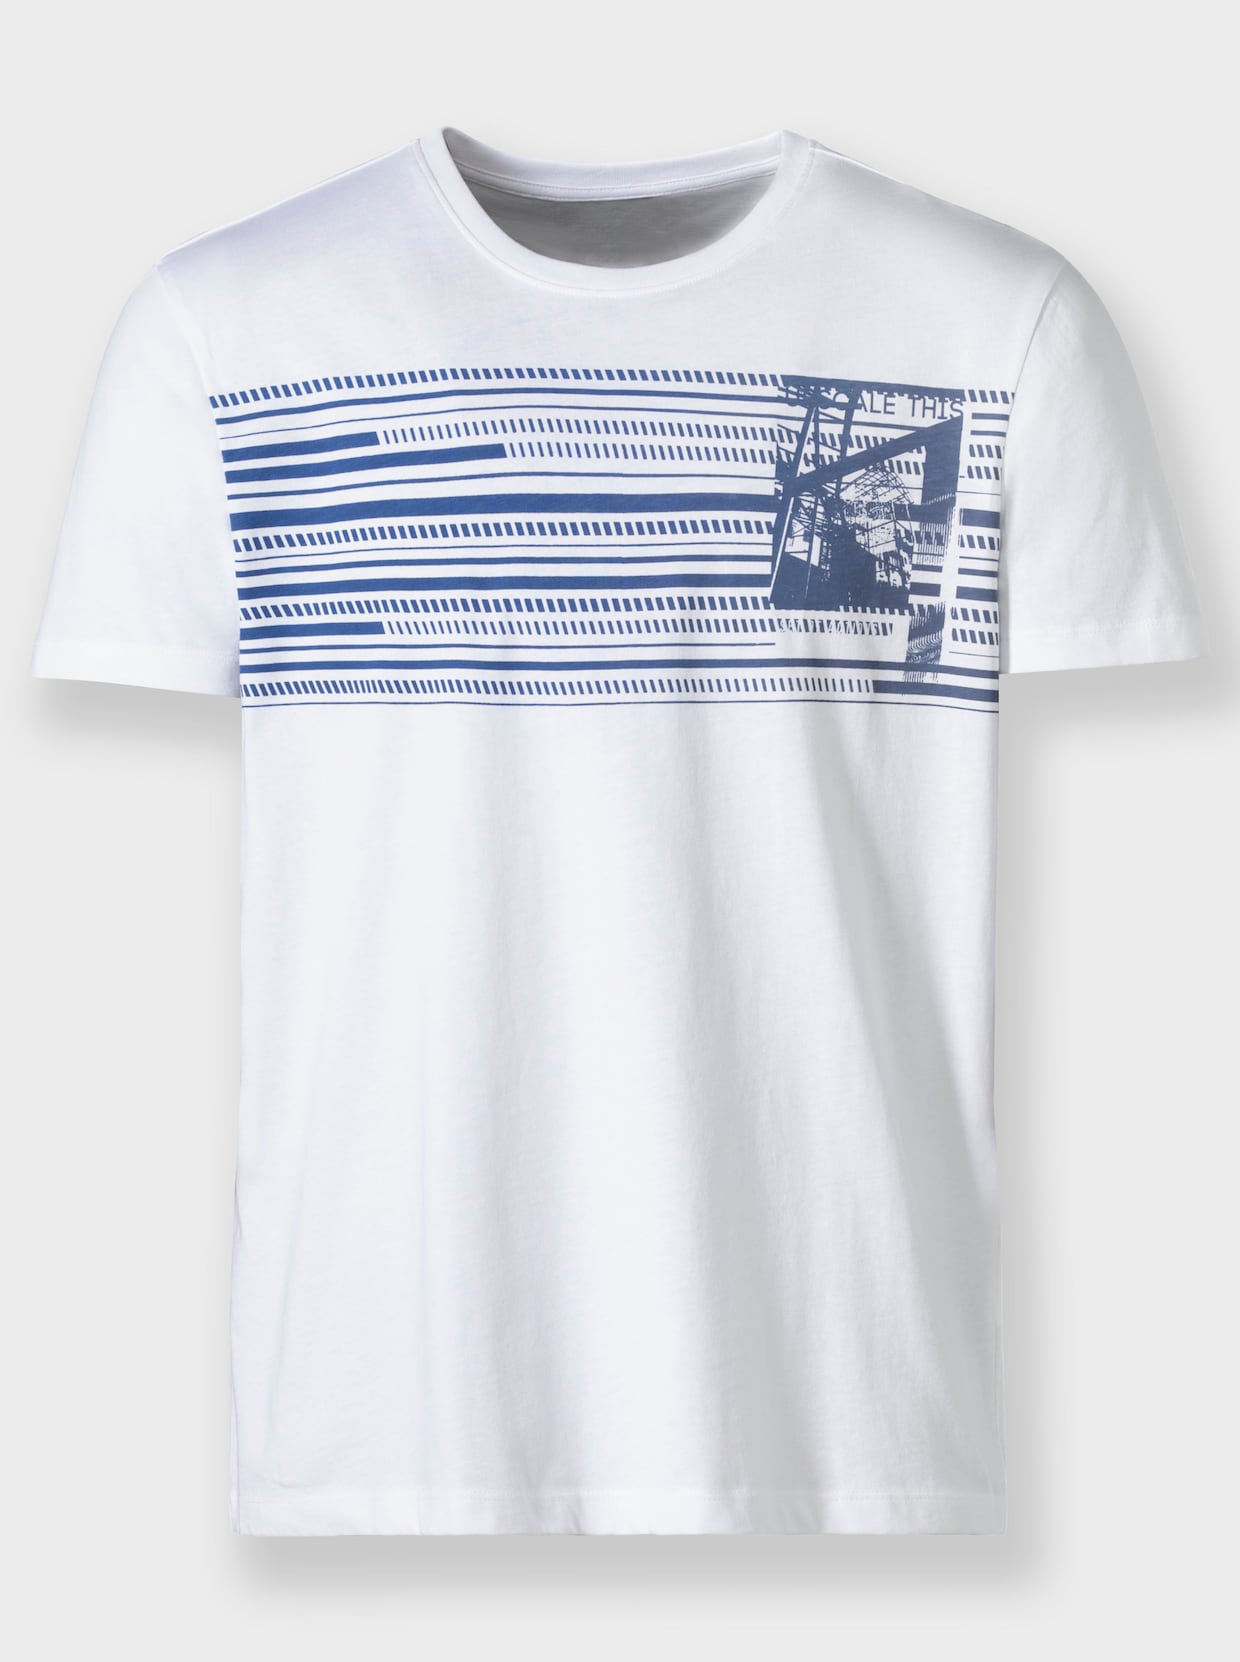 Catamaran Shirts (2 stuks) - wit + jeansblauw